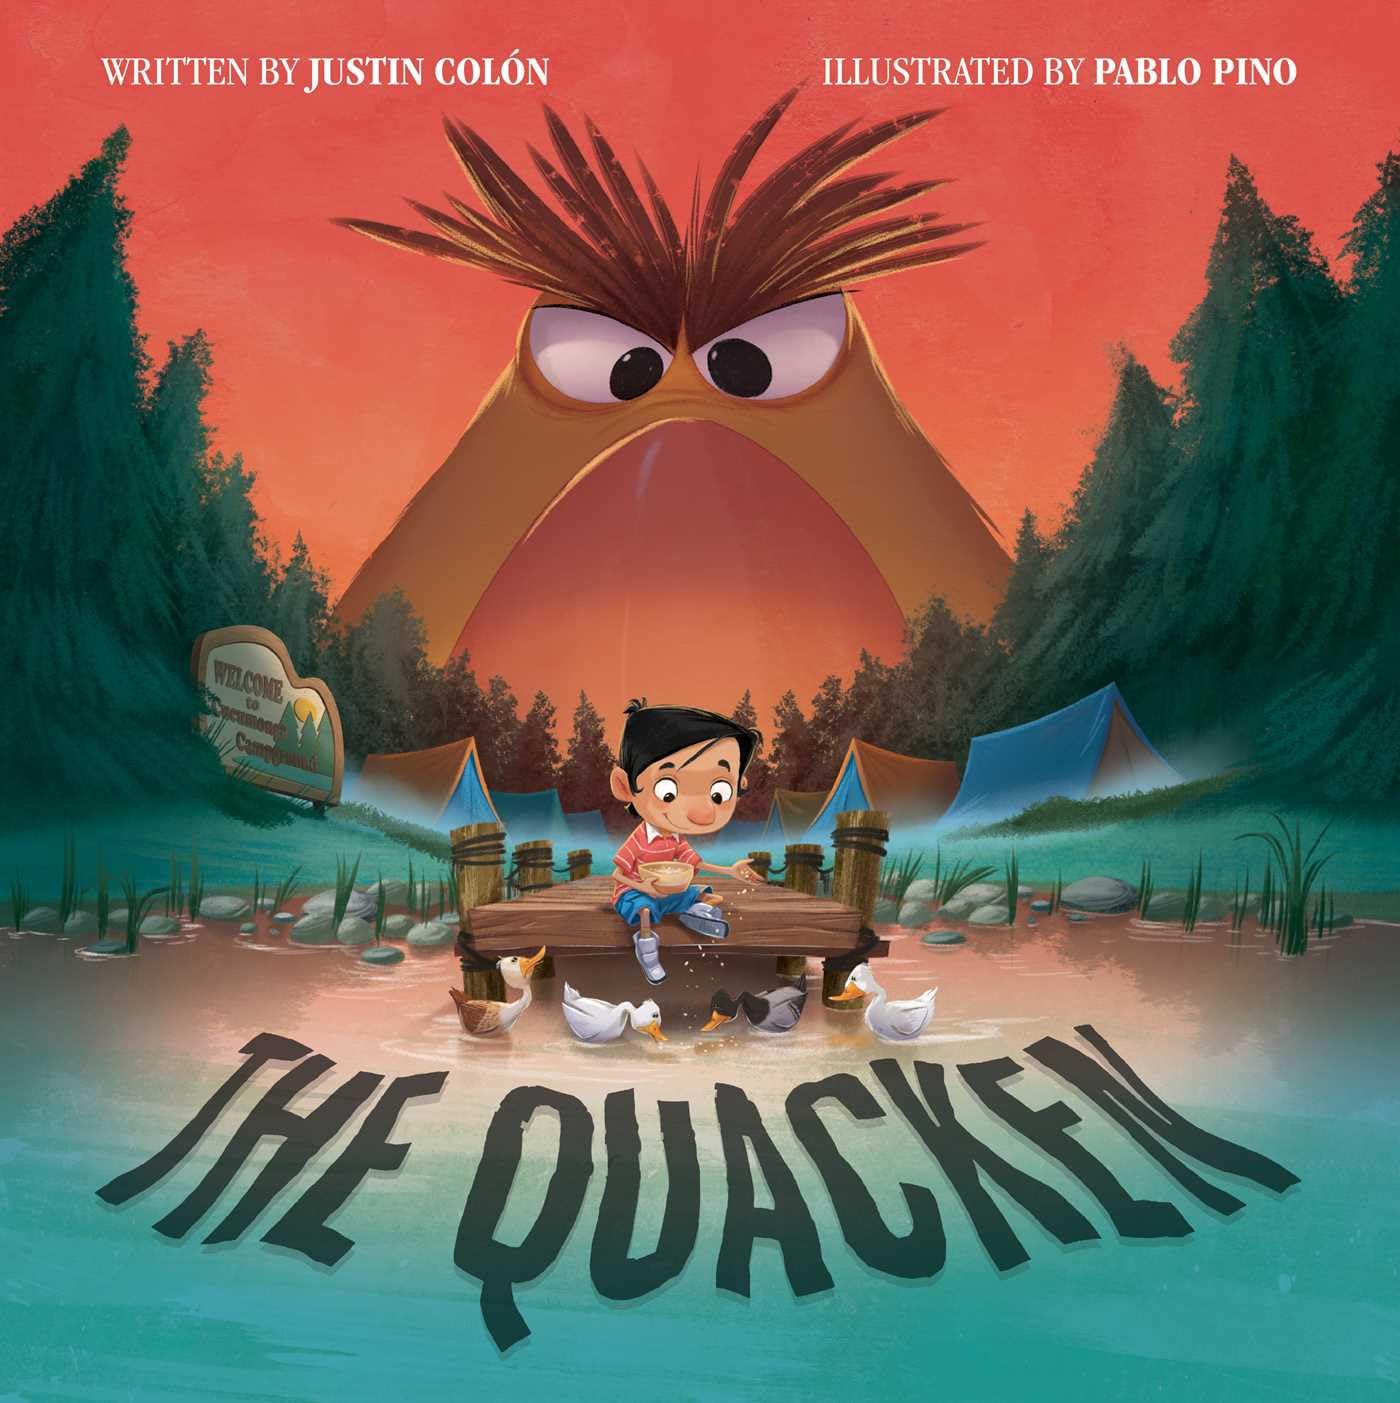 The Quacken by Justin Colón